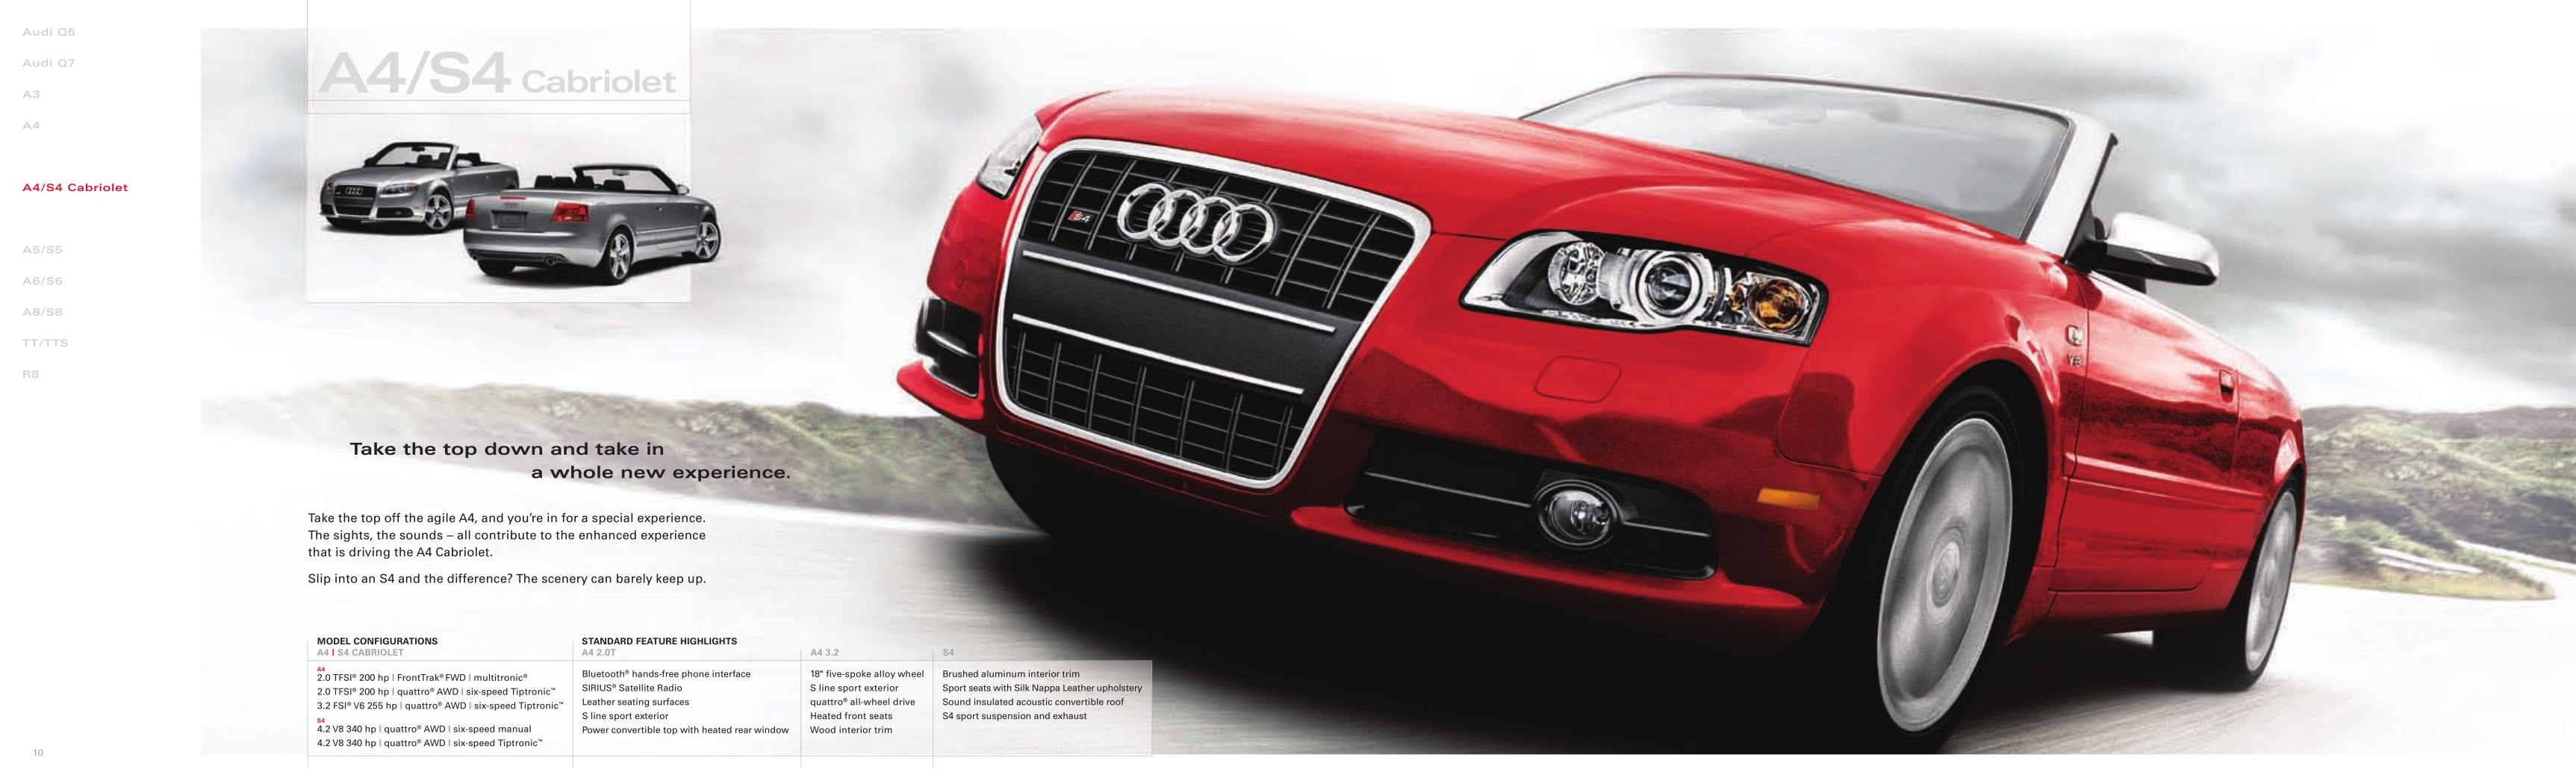 2009 Audi Brochure Page 4